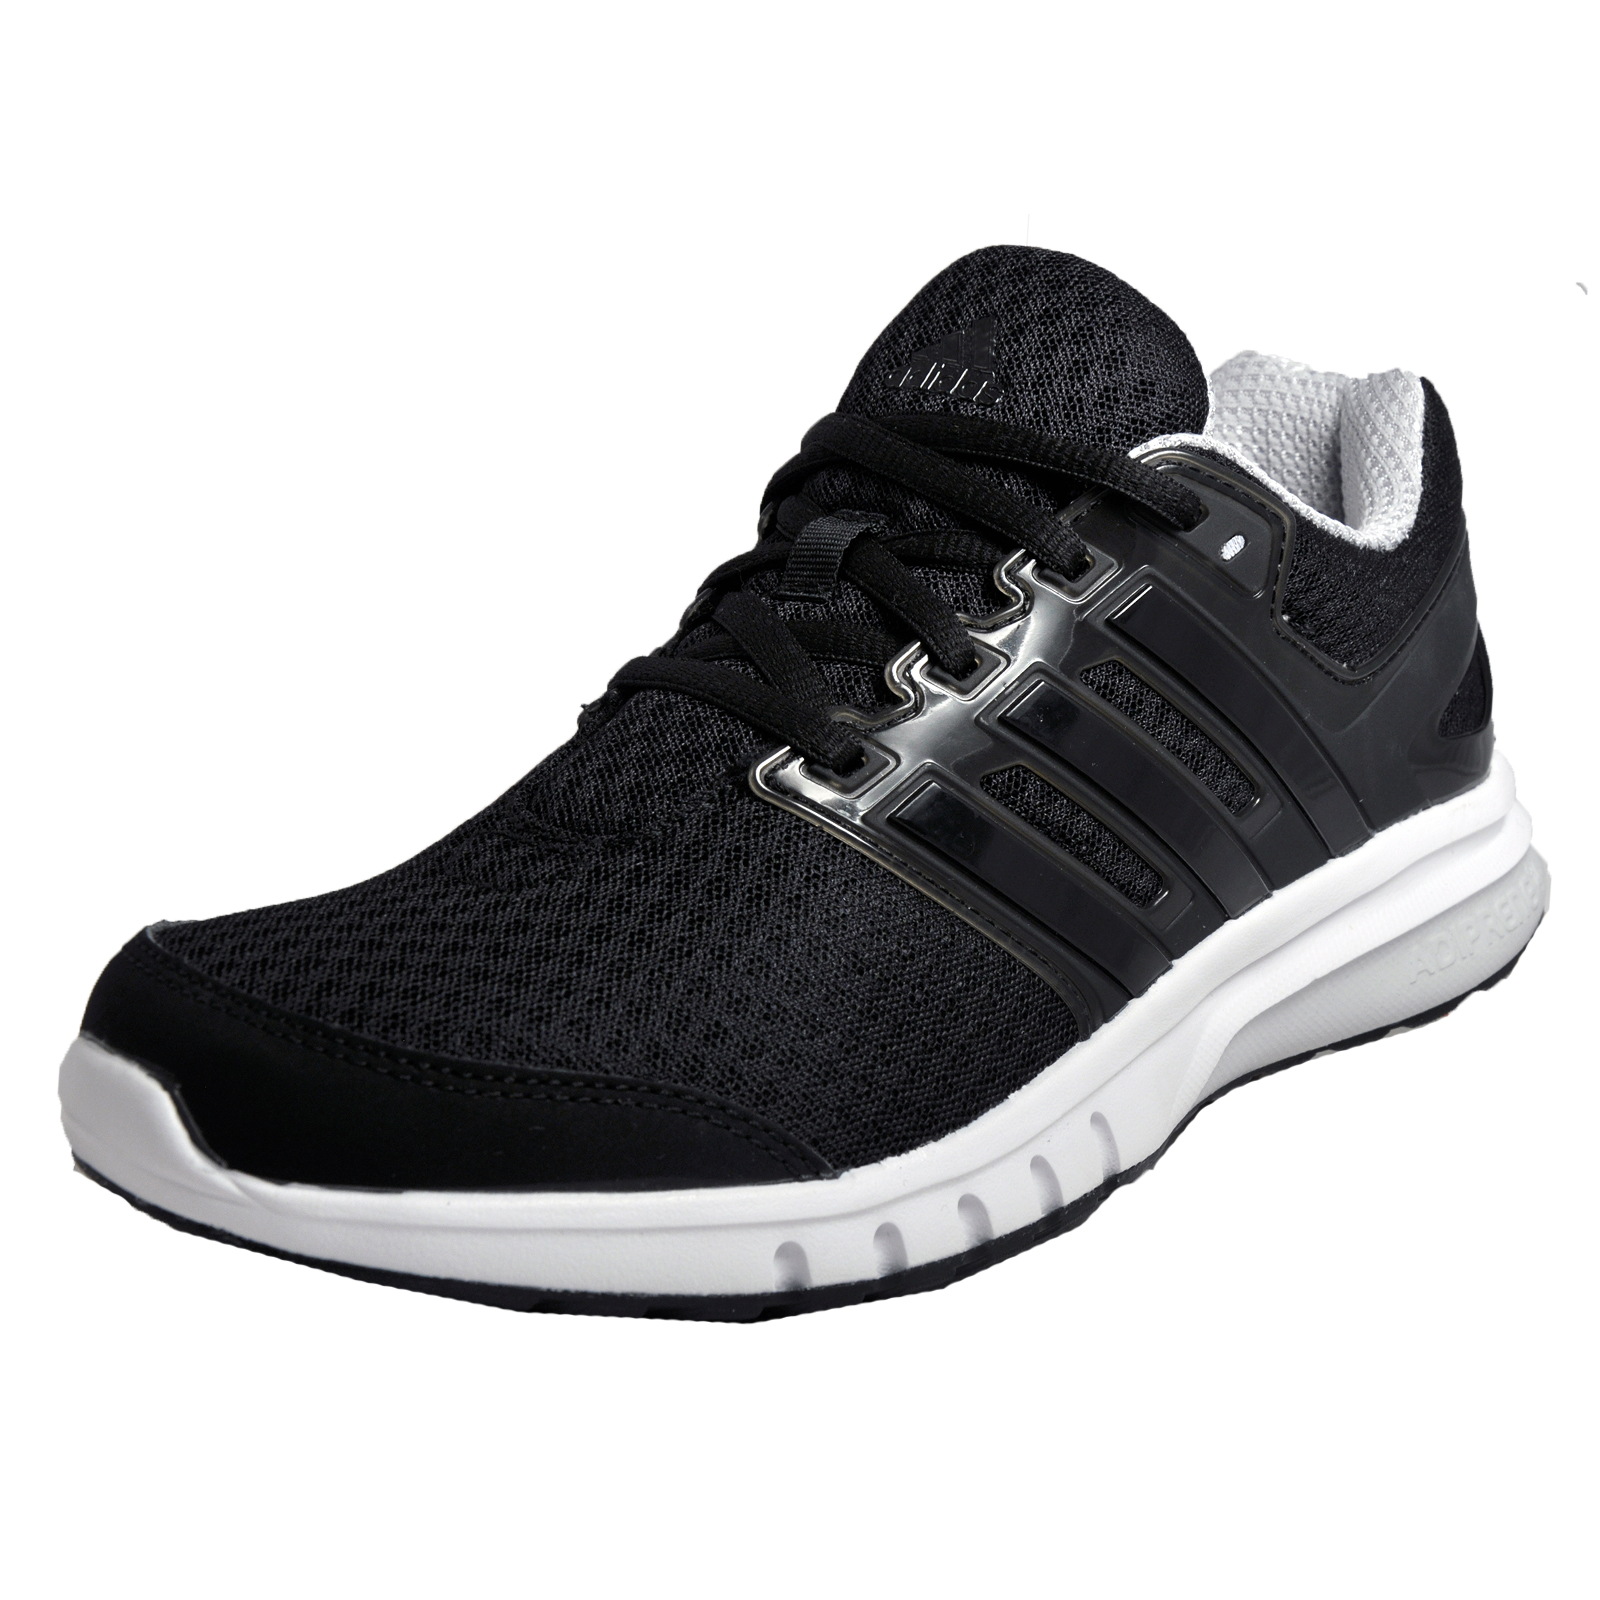 Adidas Galaxy Elite 2 Mens Running Shoes Fitness Gym Trainers Black | eBay